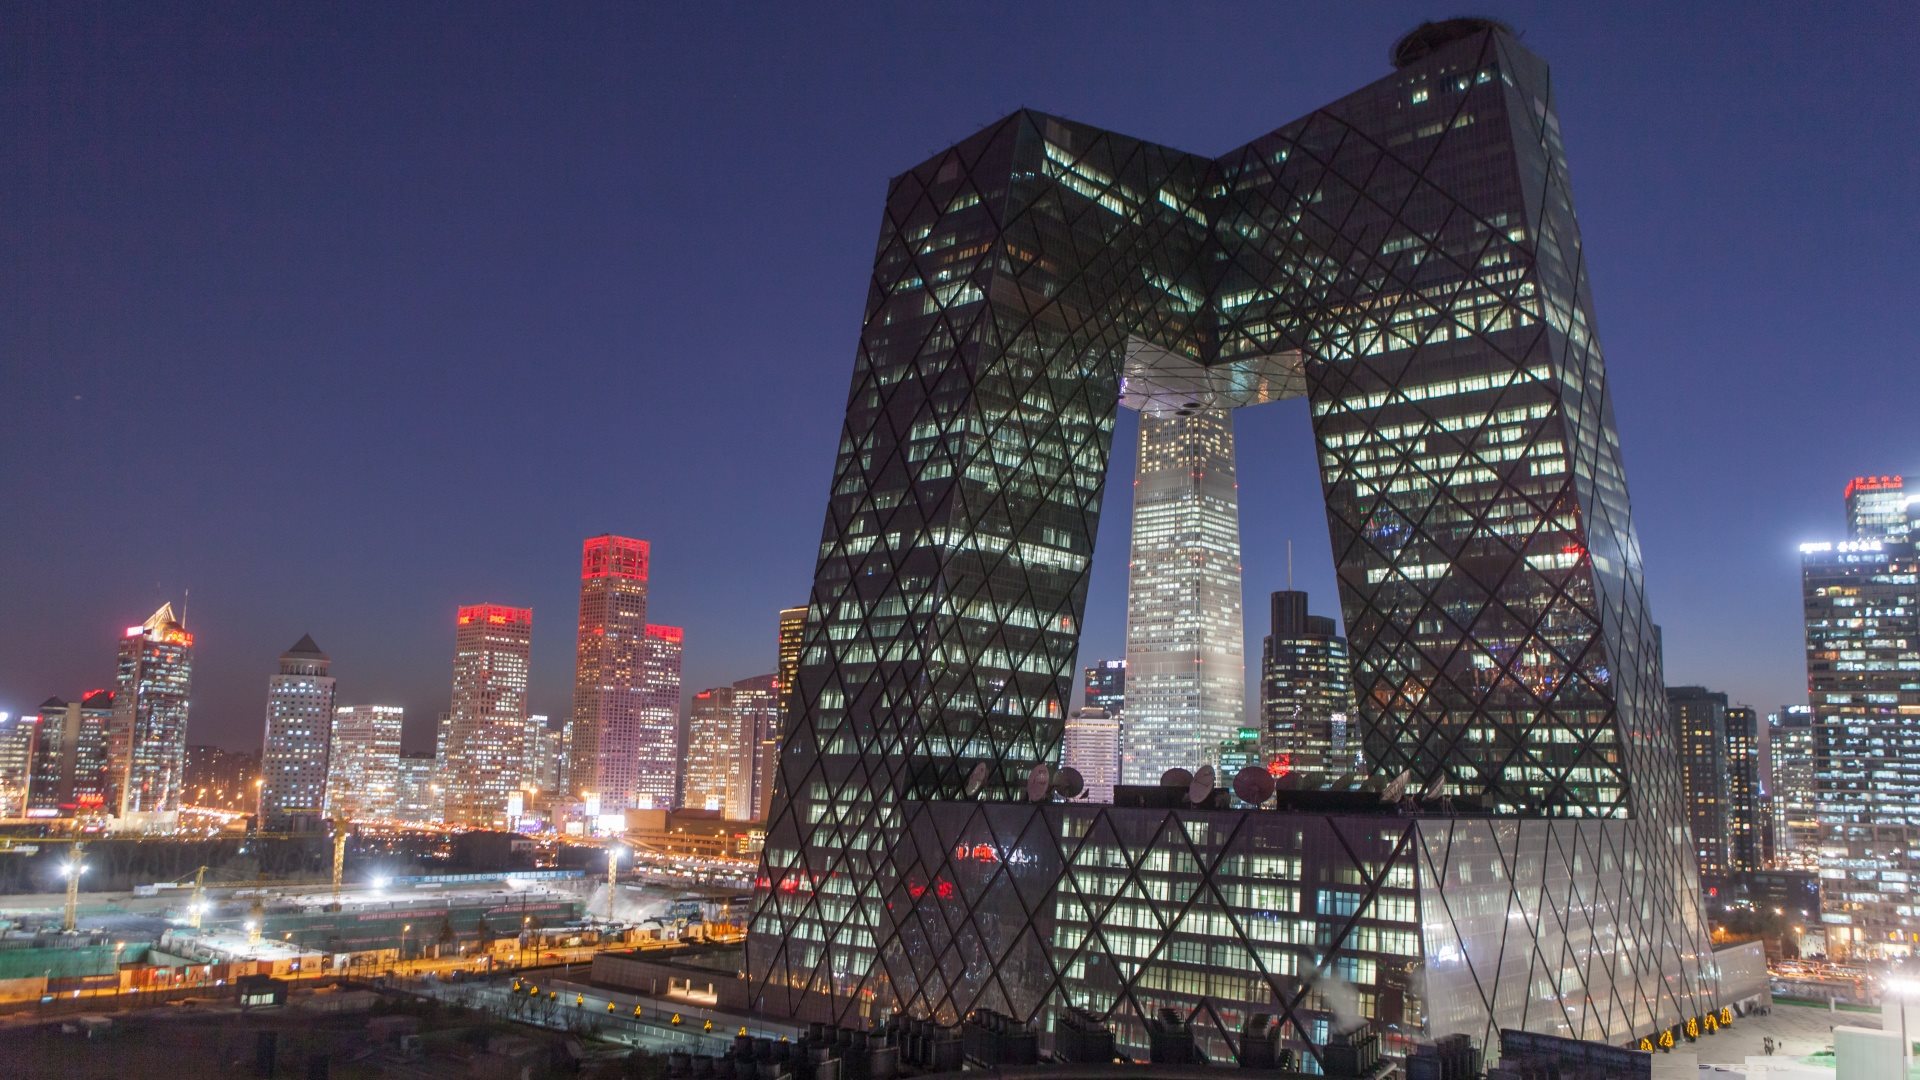 Cctv Building At Night In Beijing China HD Wallpaper